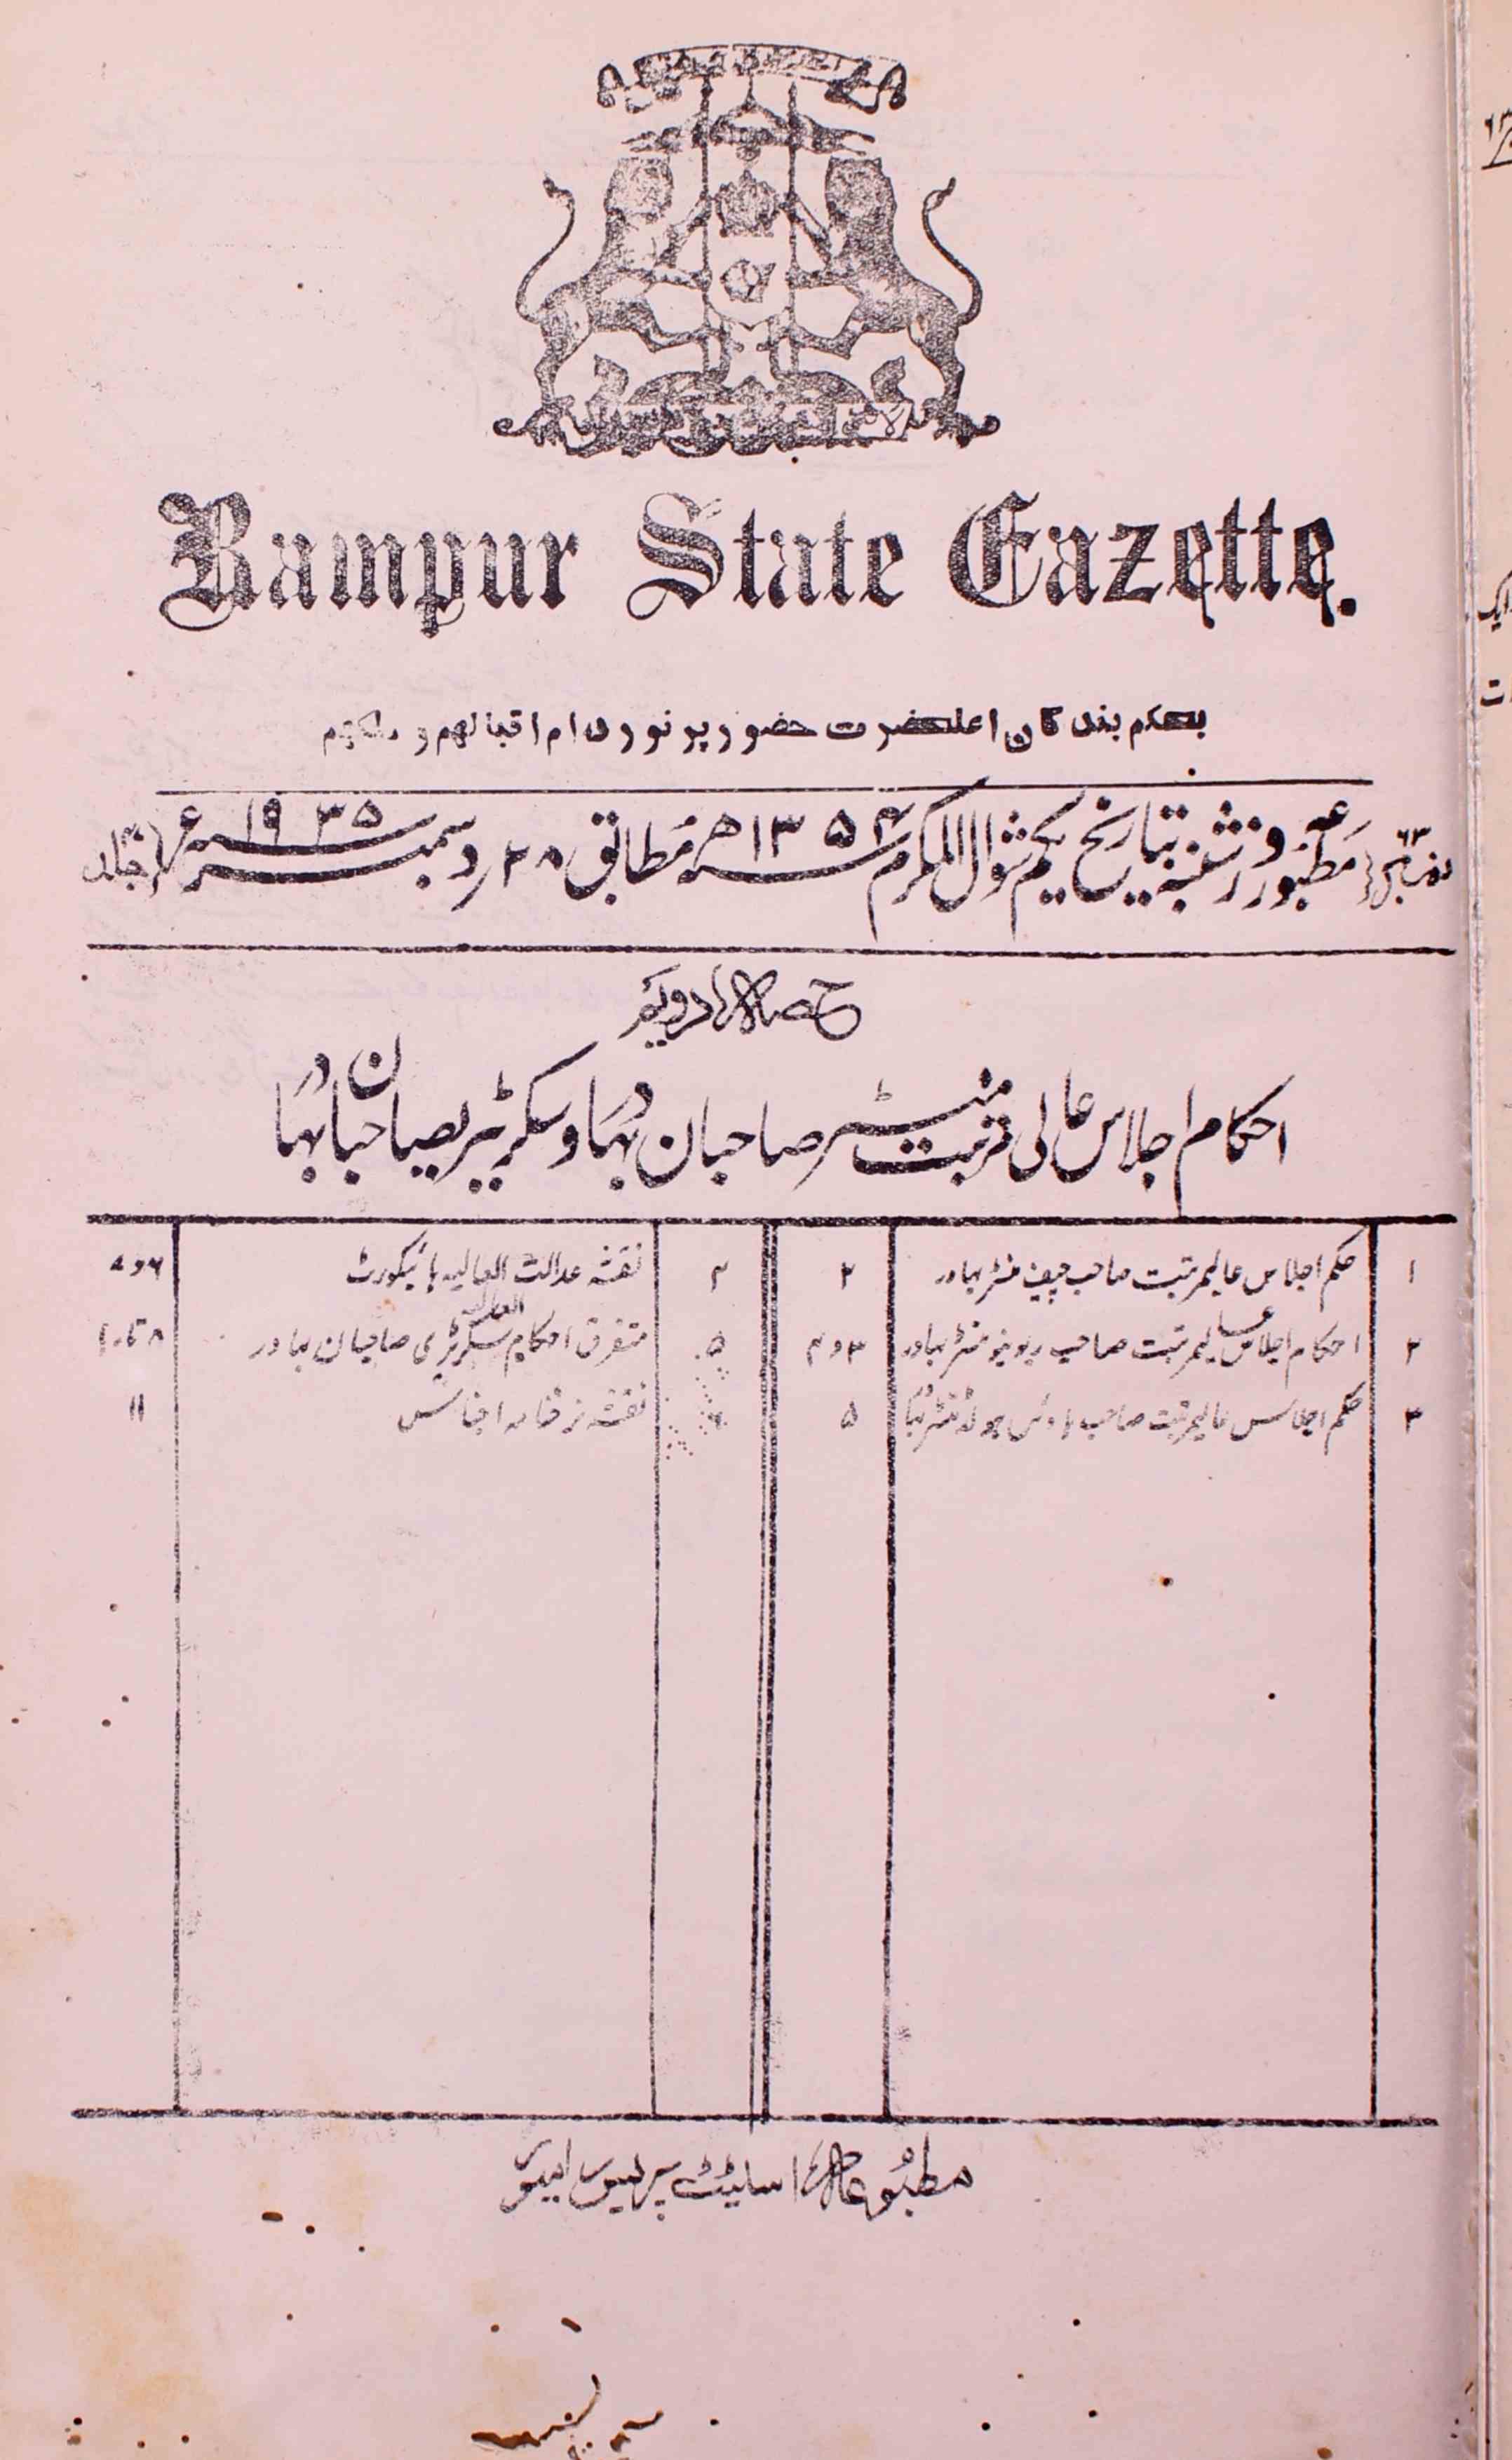 Rampur State Gazette